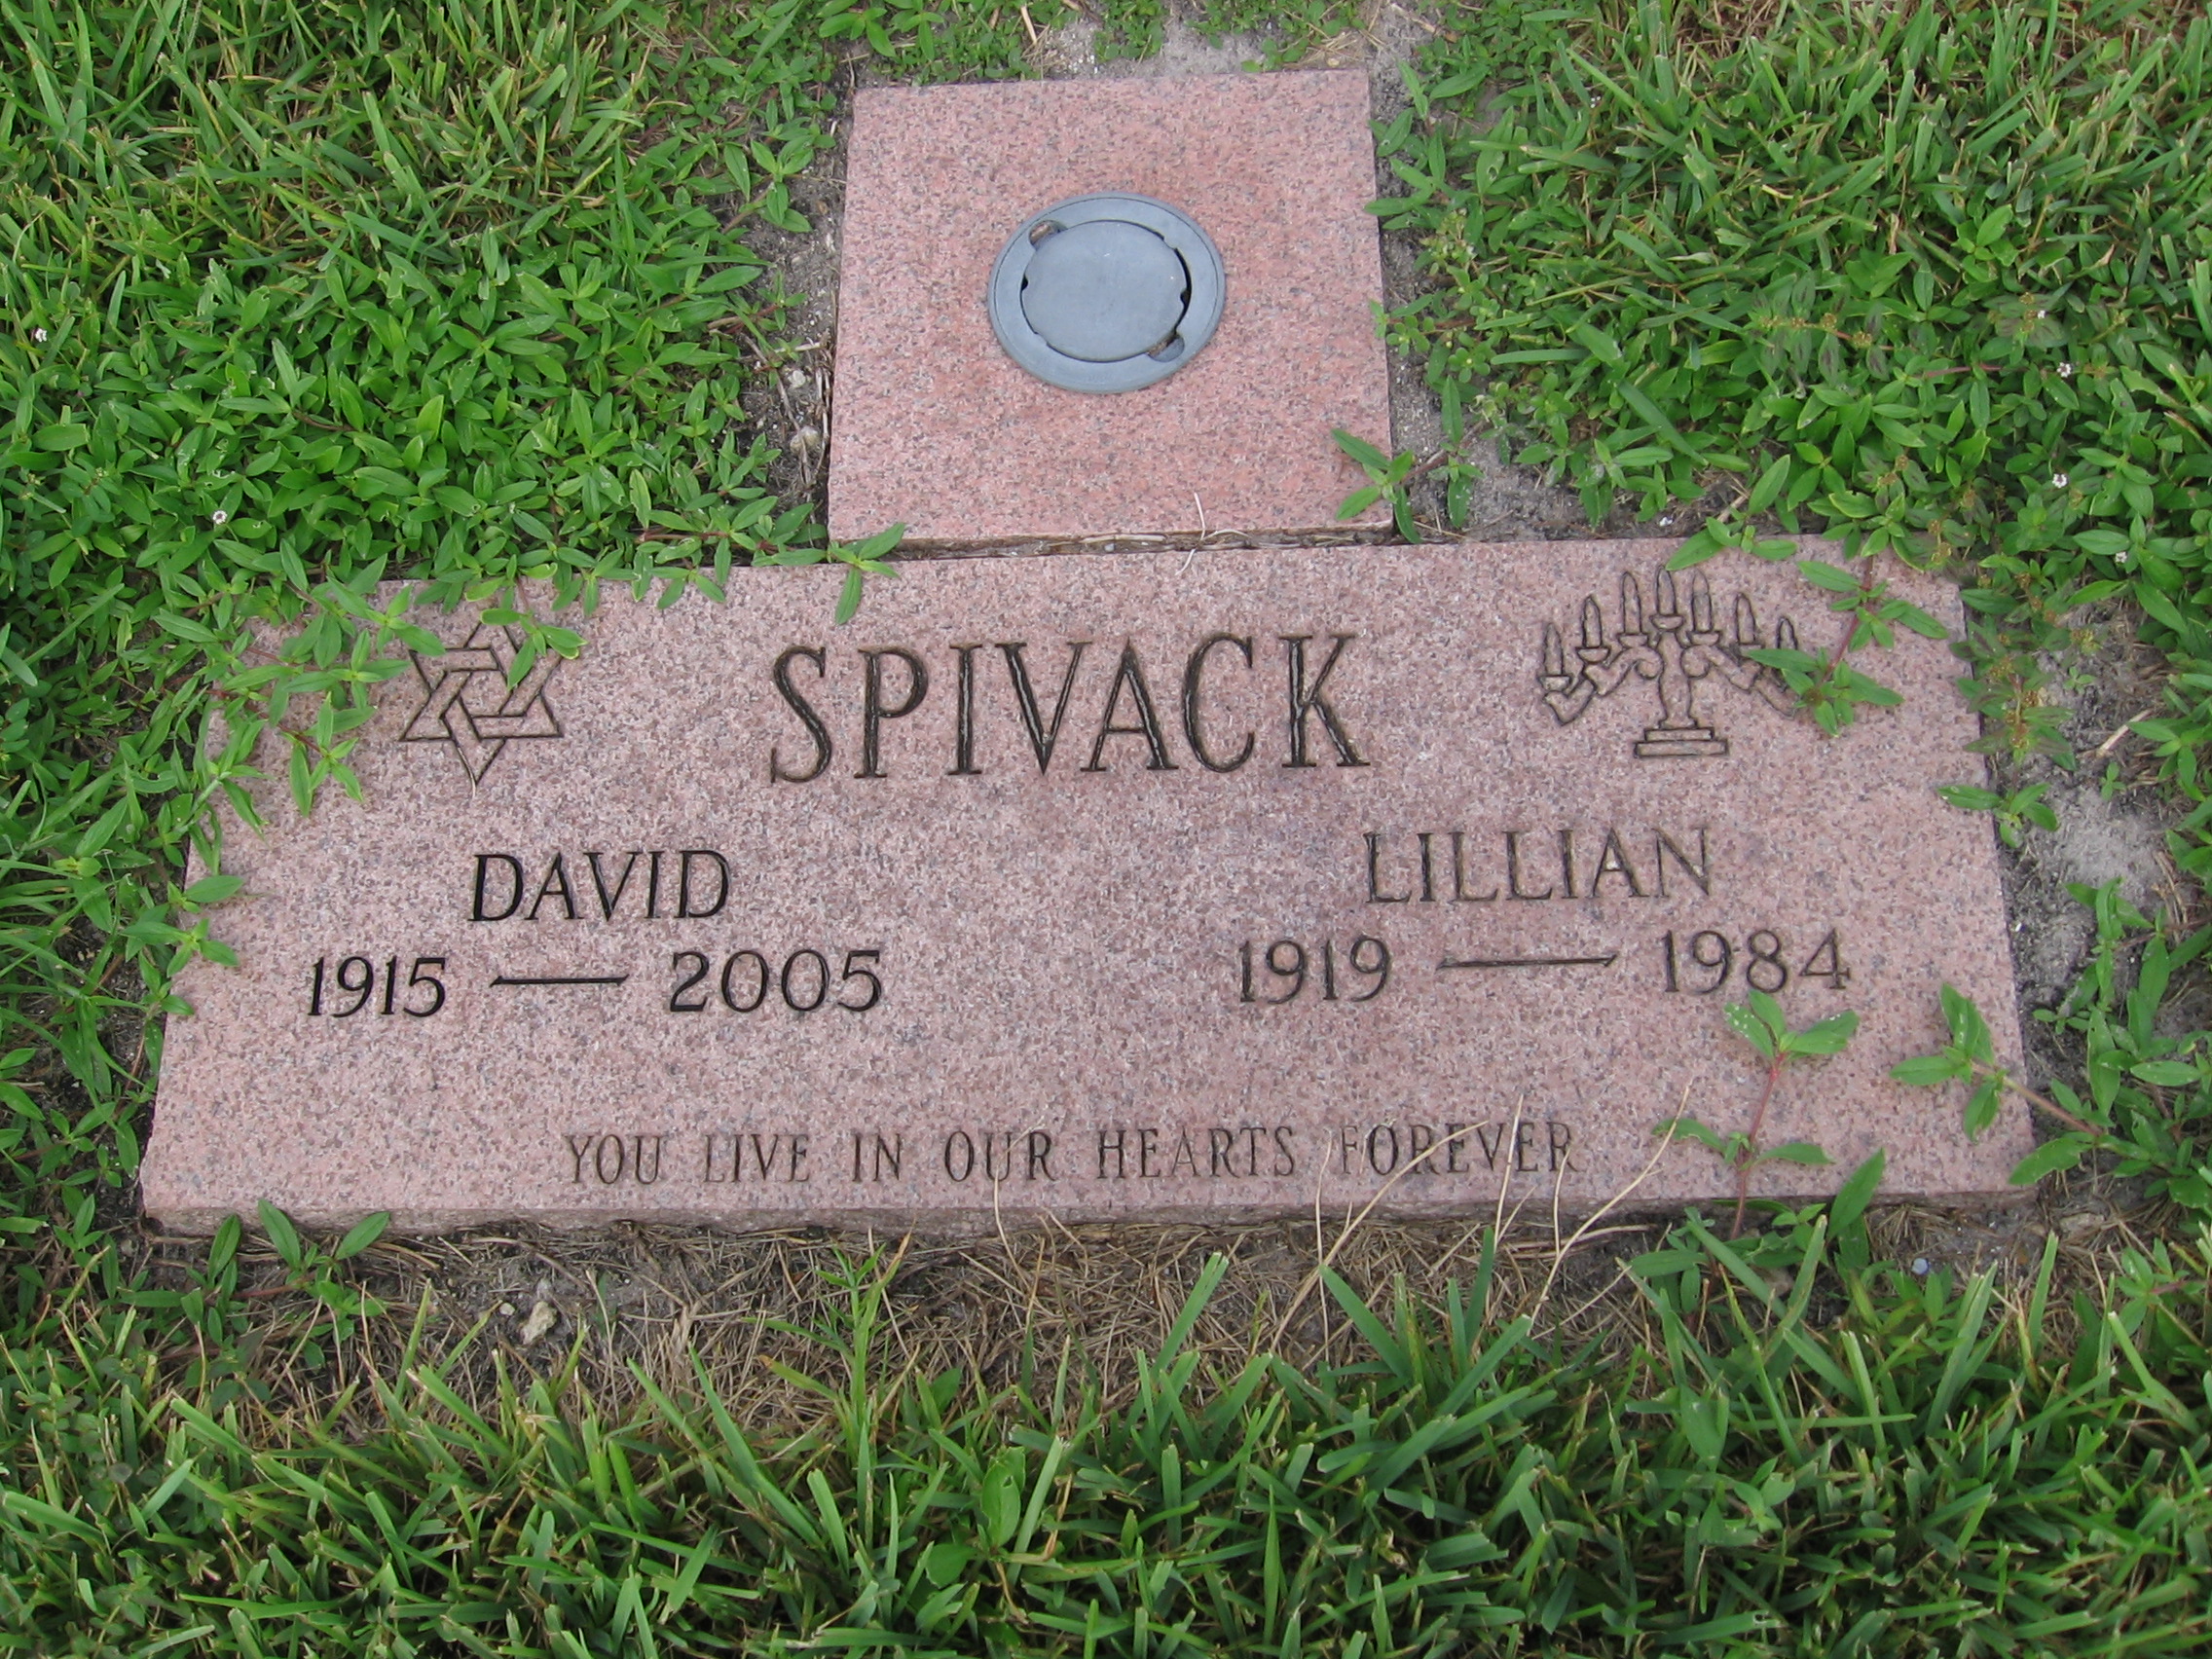 Lillian Spivack